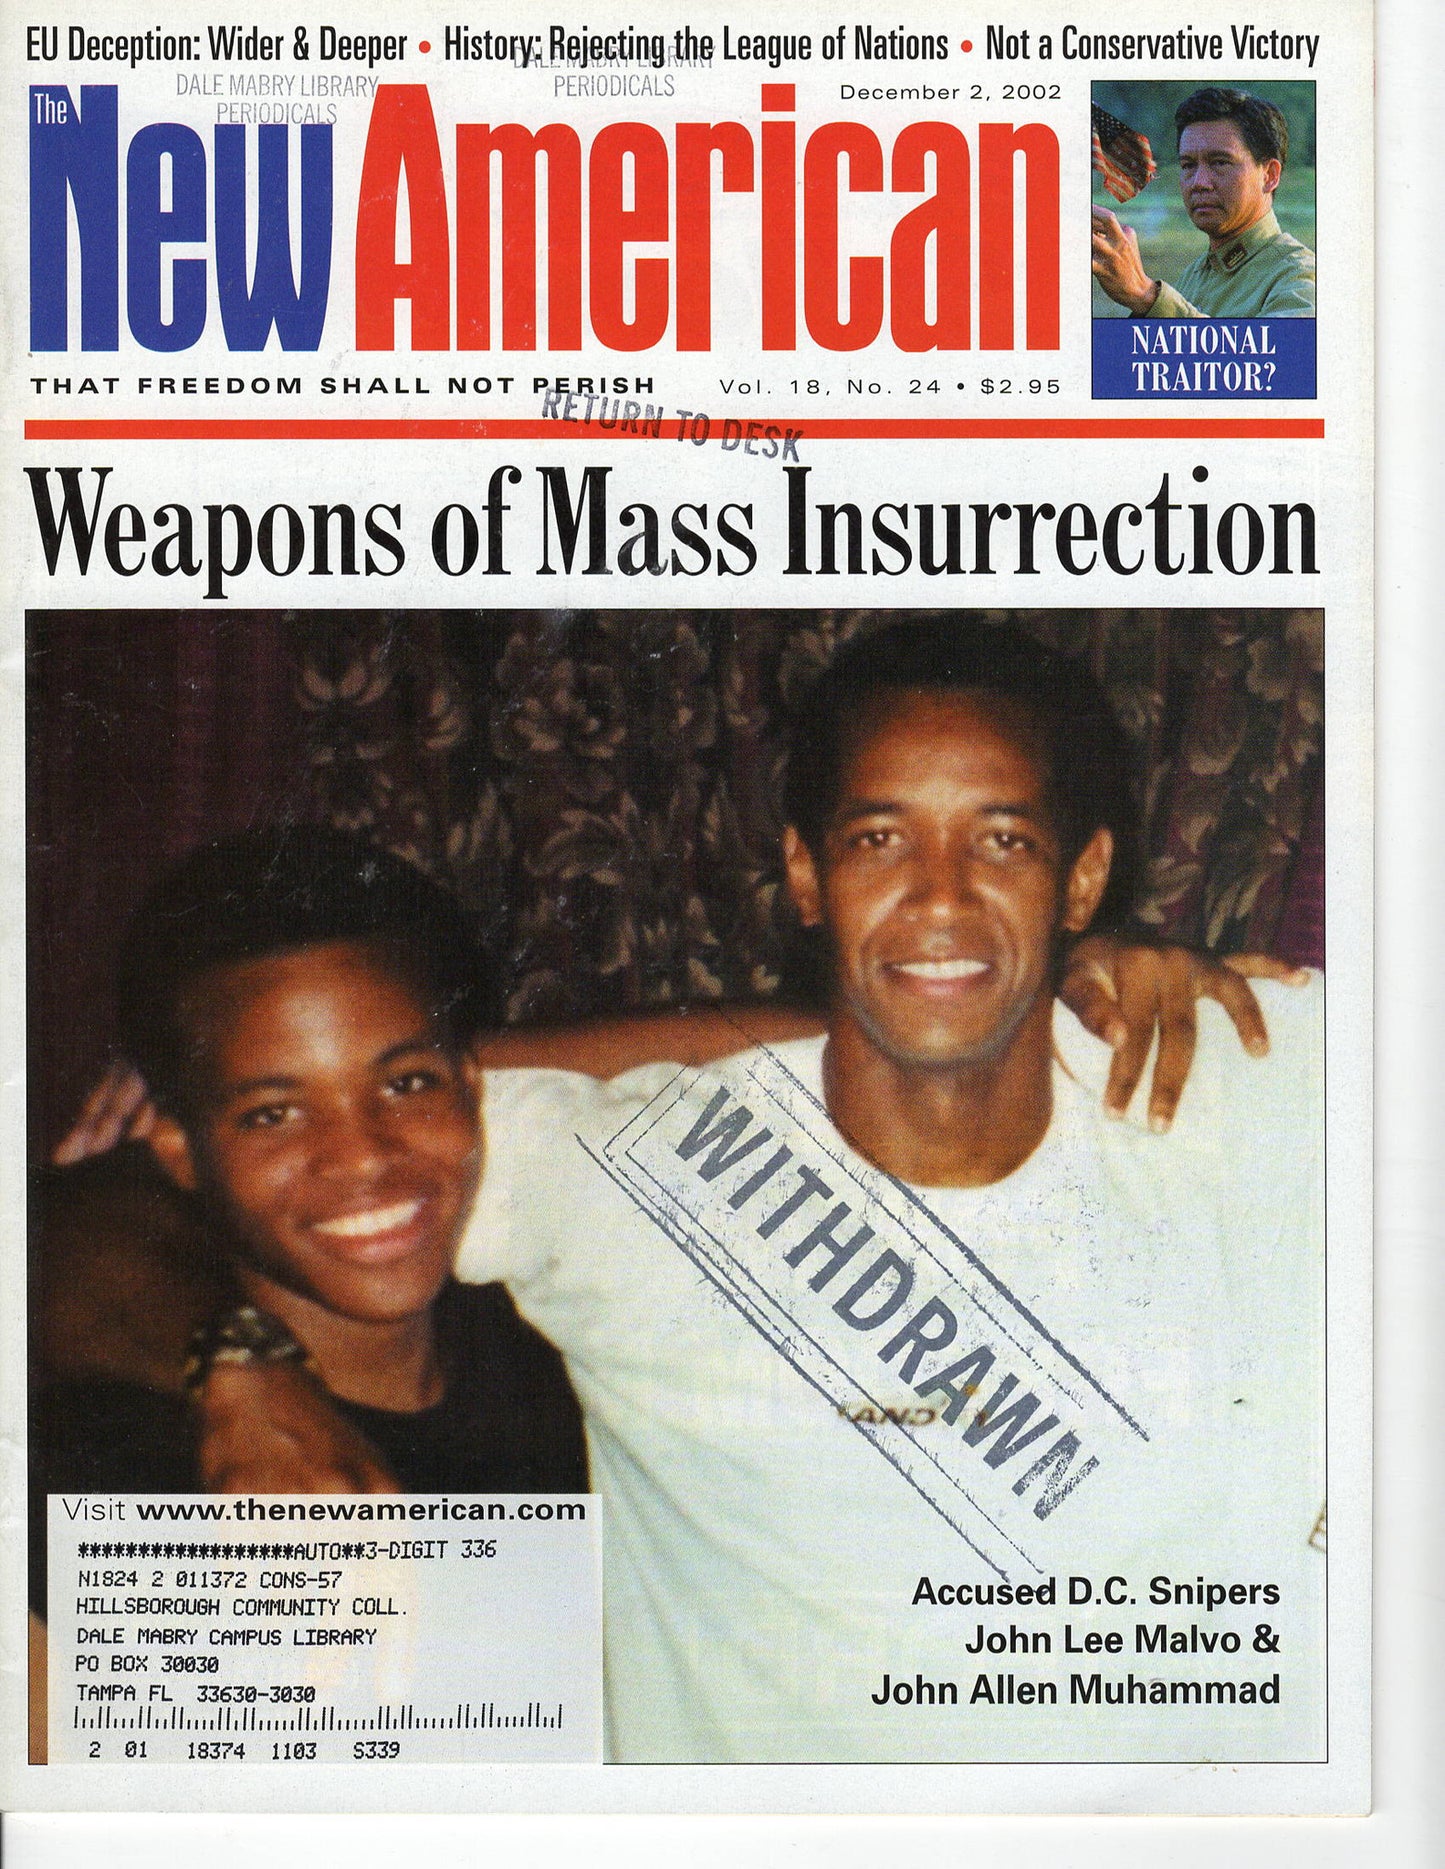 12 02 2002 The New American Malvo & Muhammad